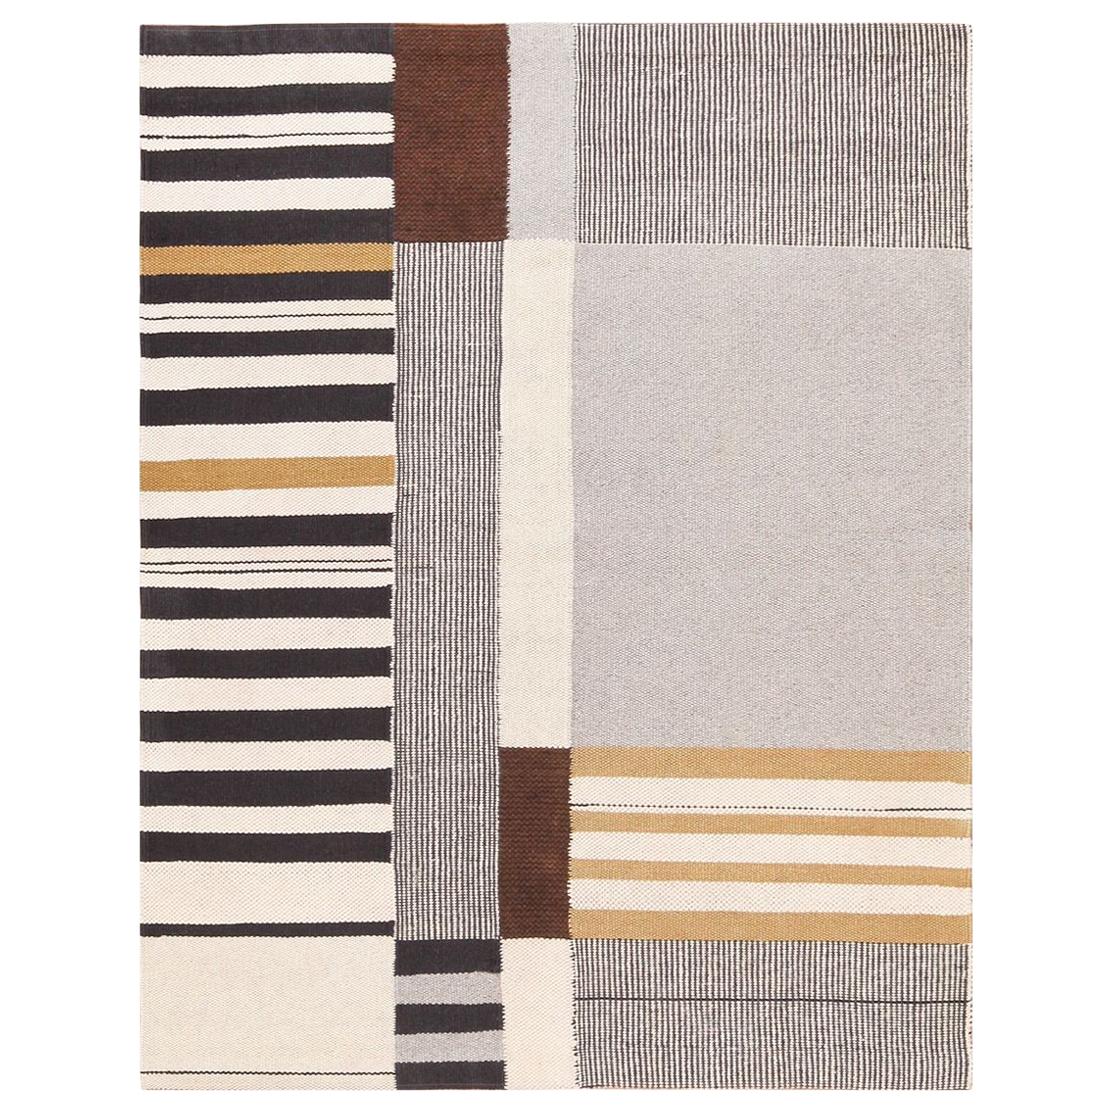 Vintage Flat Woven Kilim Carpet by Artist Alice Kagawa Parrott